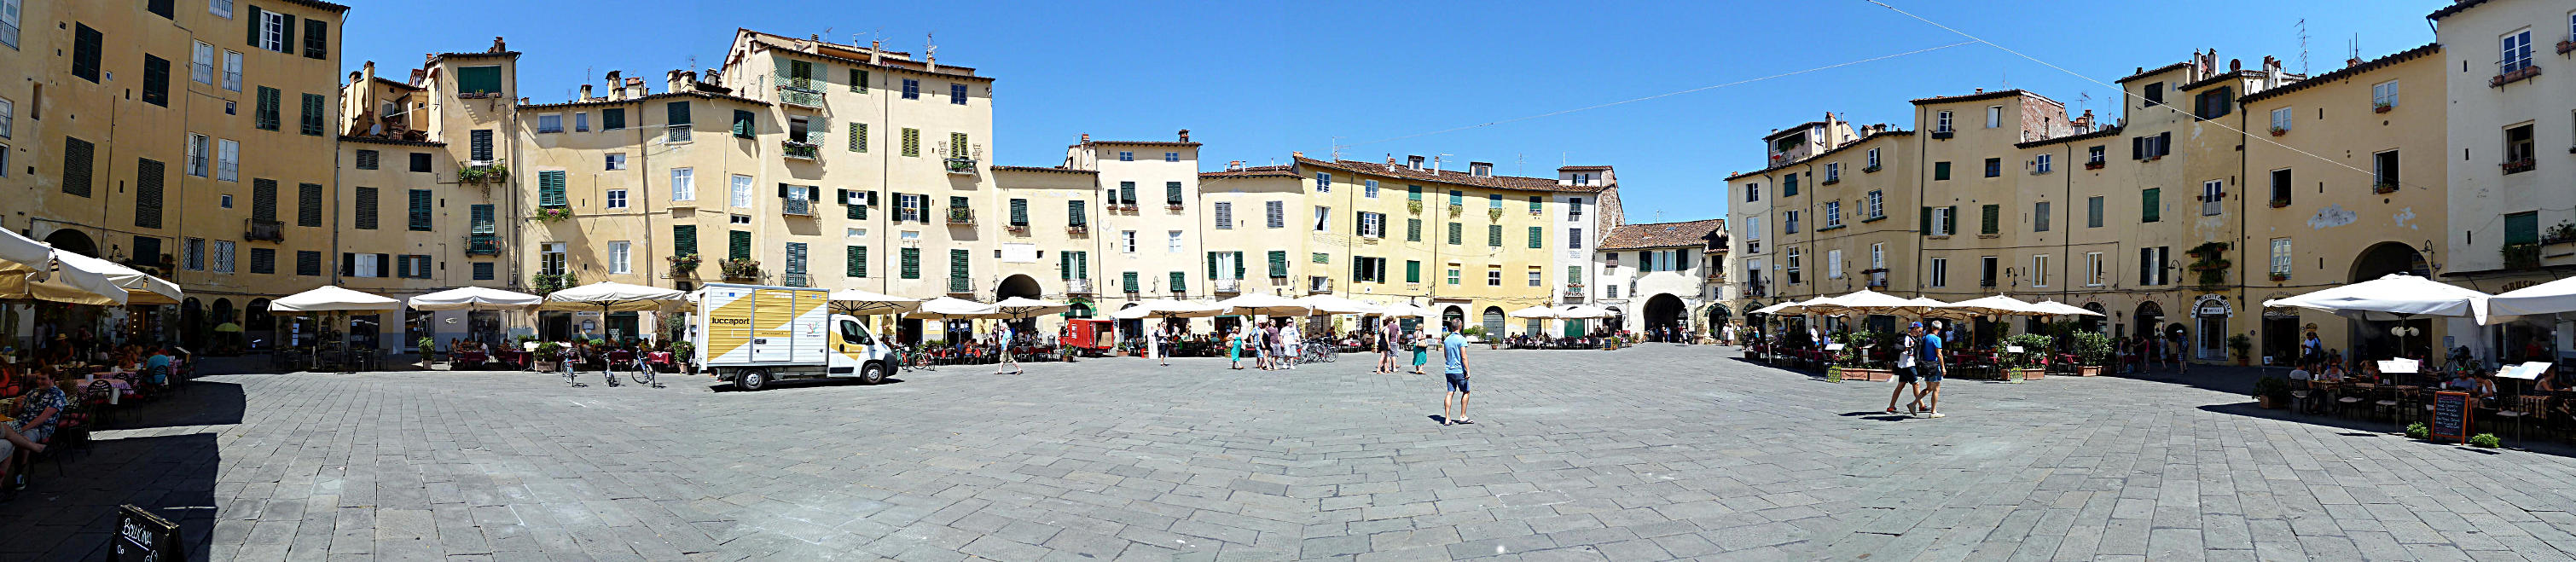 Lucca - Panorama der Piazza dell'Anfiteatro